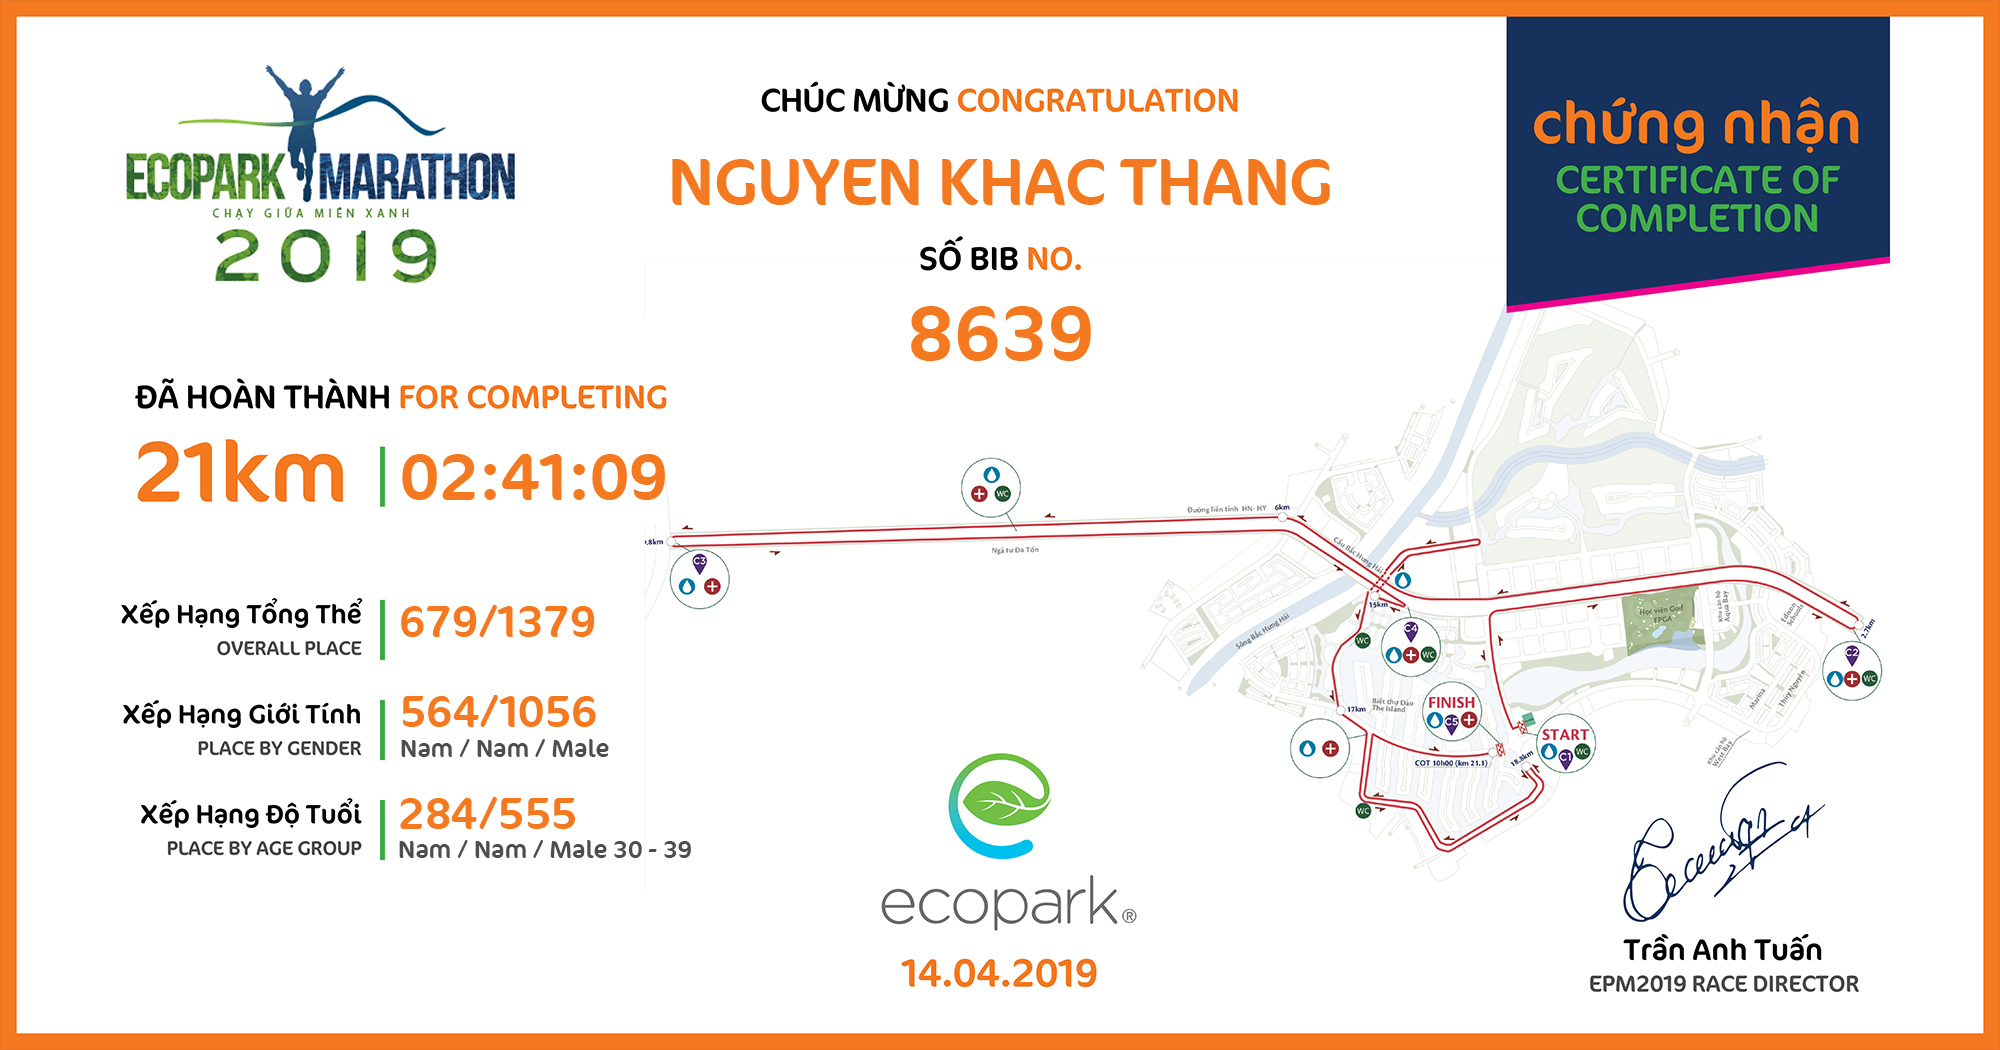 8639 - Nguyen Khac Thang